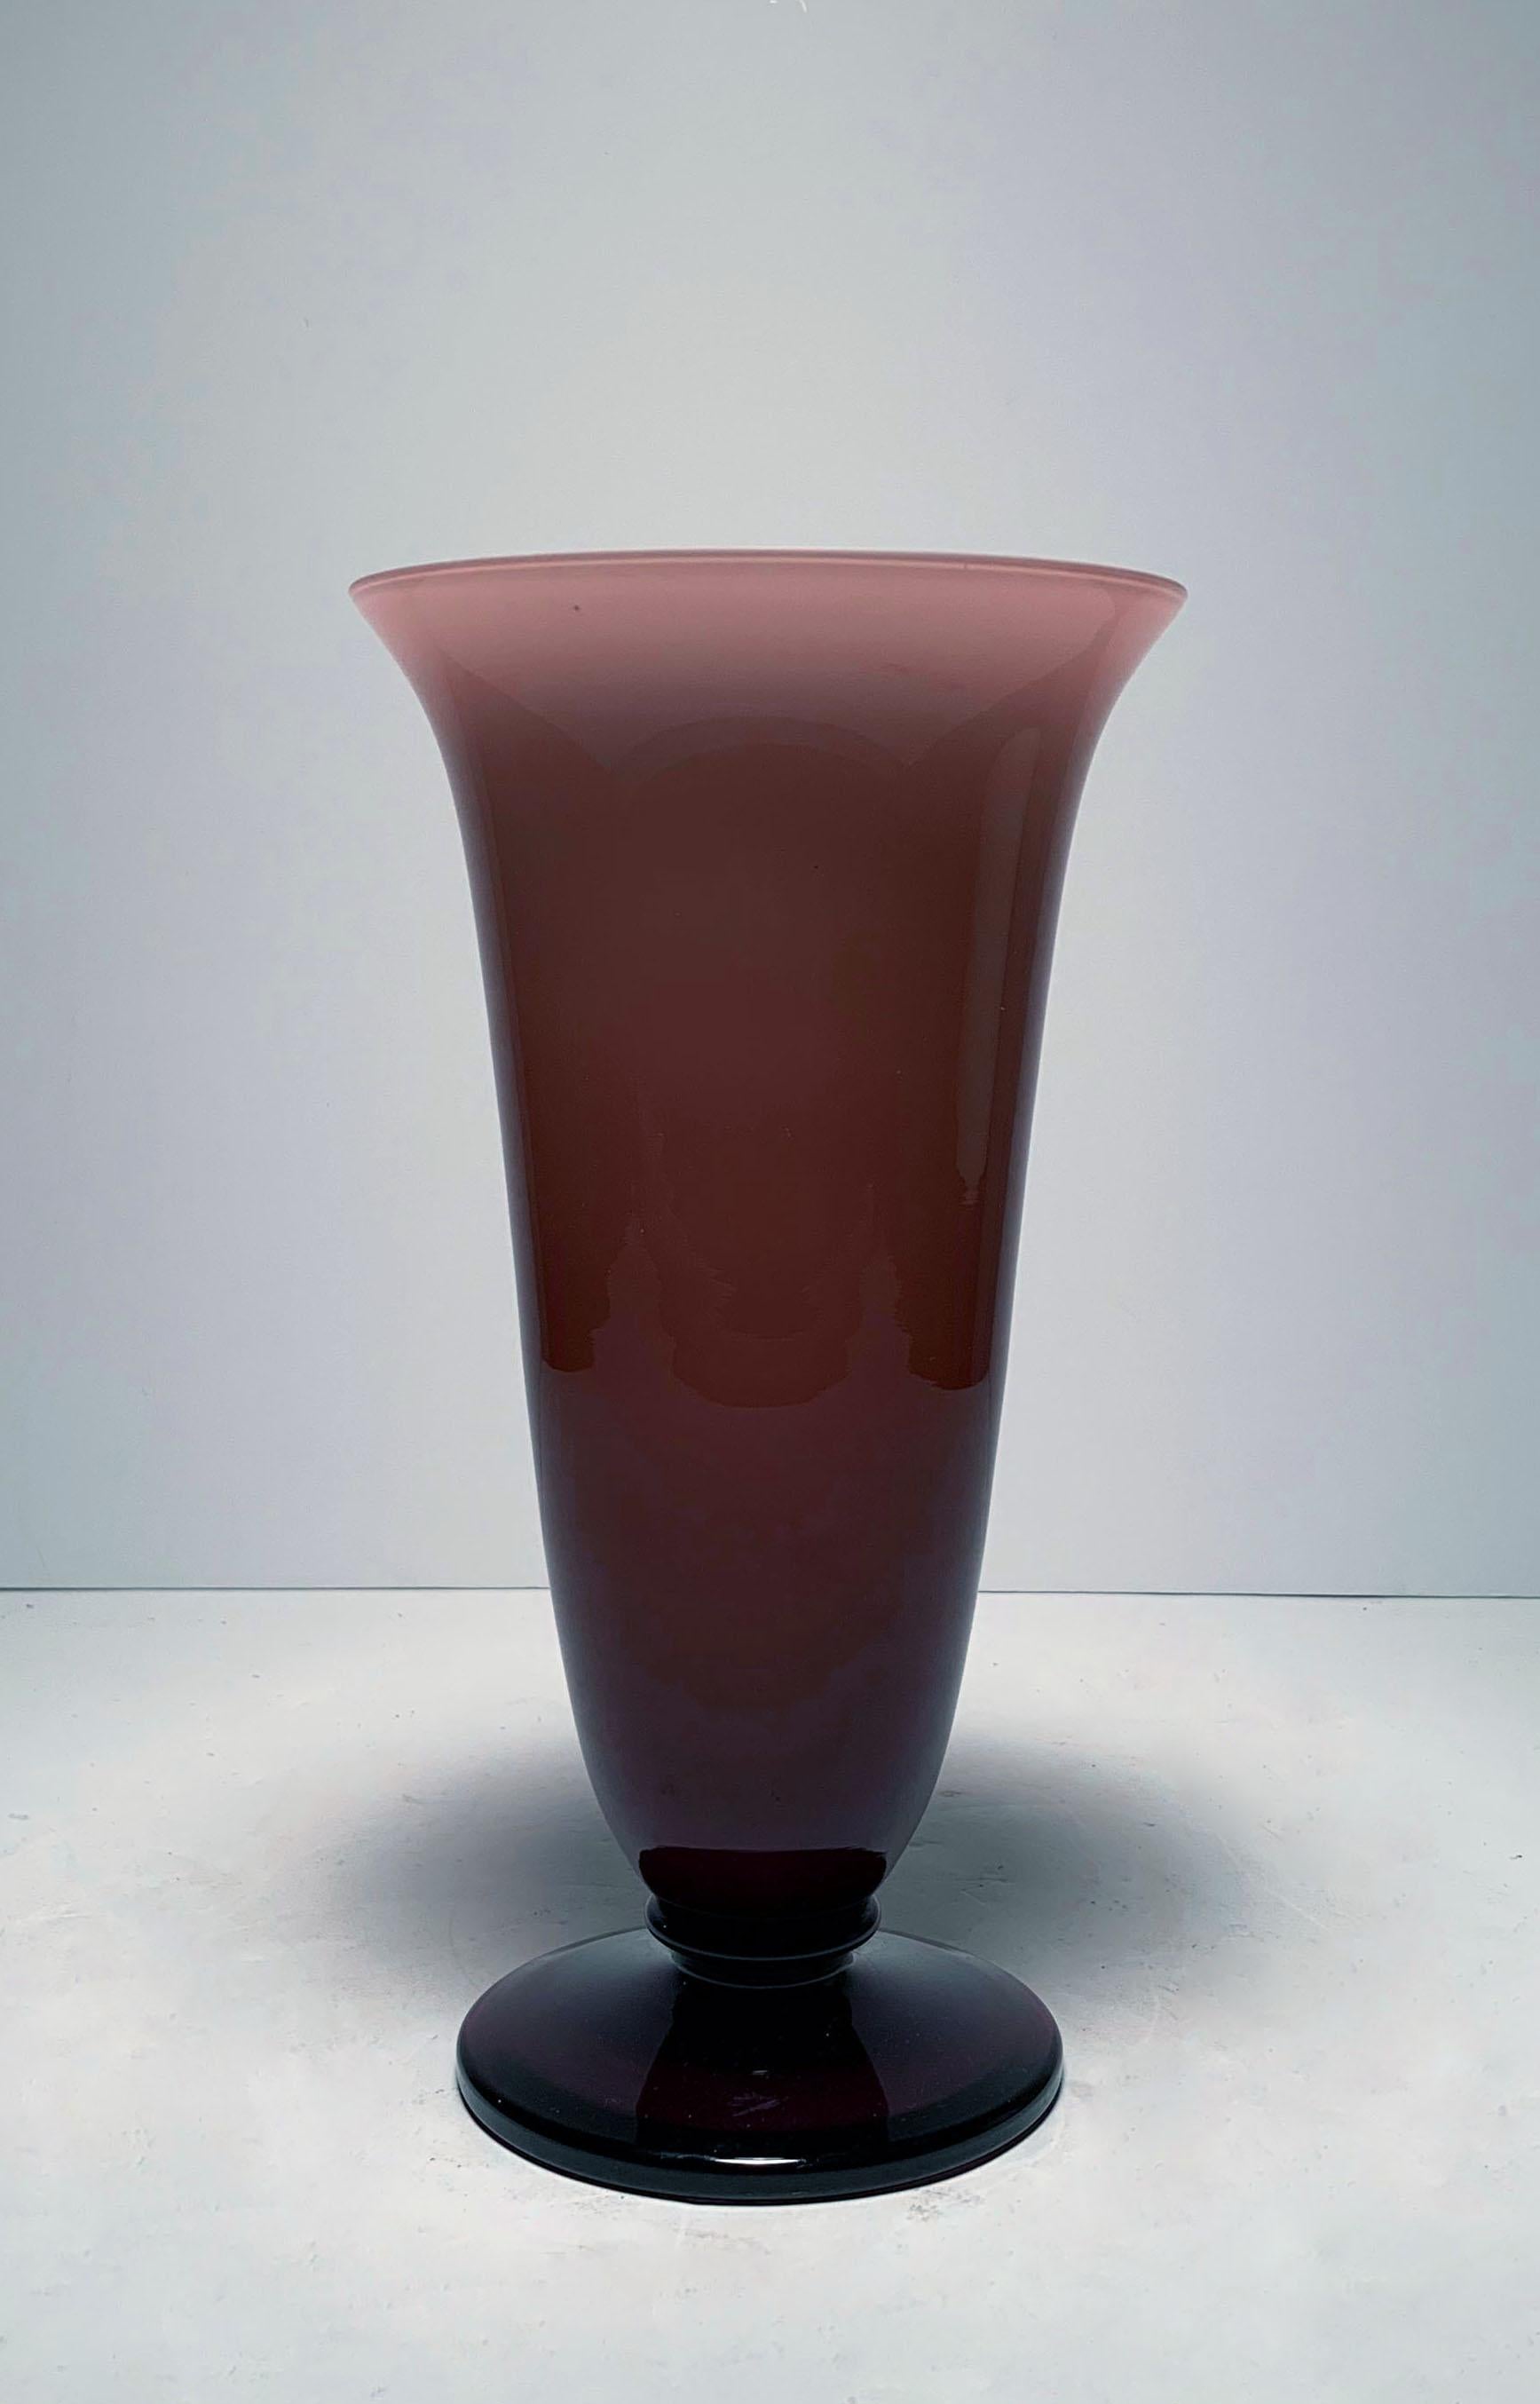 Empoli Italian glass grape purple vase.

